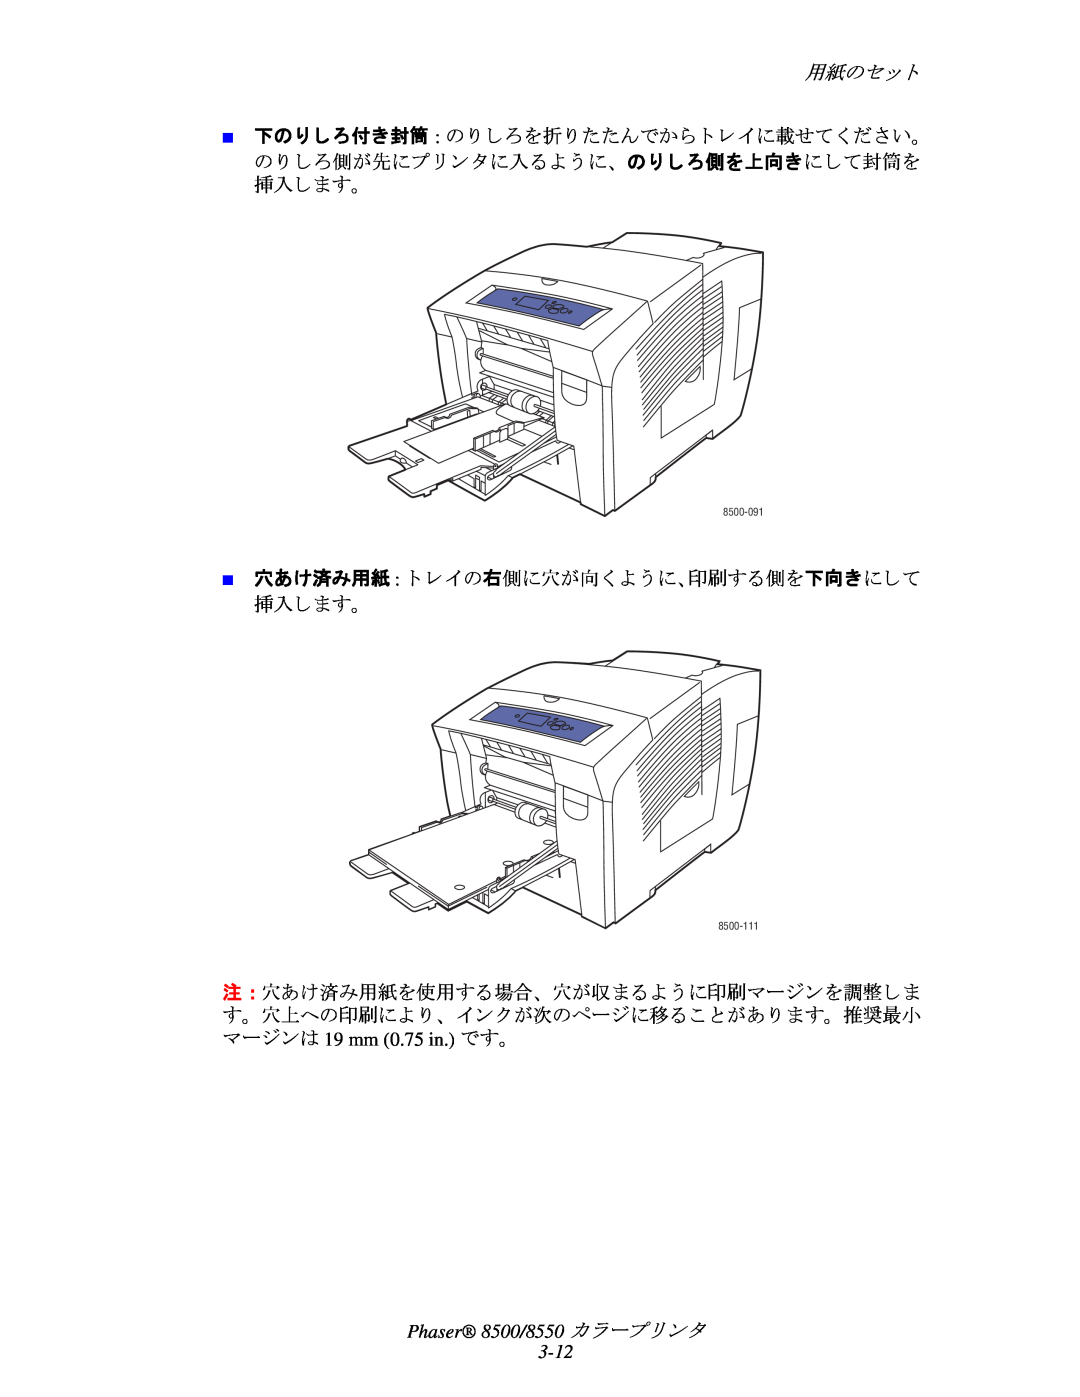 Xerox manual 用紙のセ ッ ト, Phaser 8500/8550 カ ラープ リ ン タ 3-12 